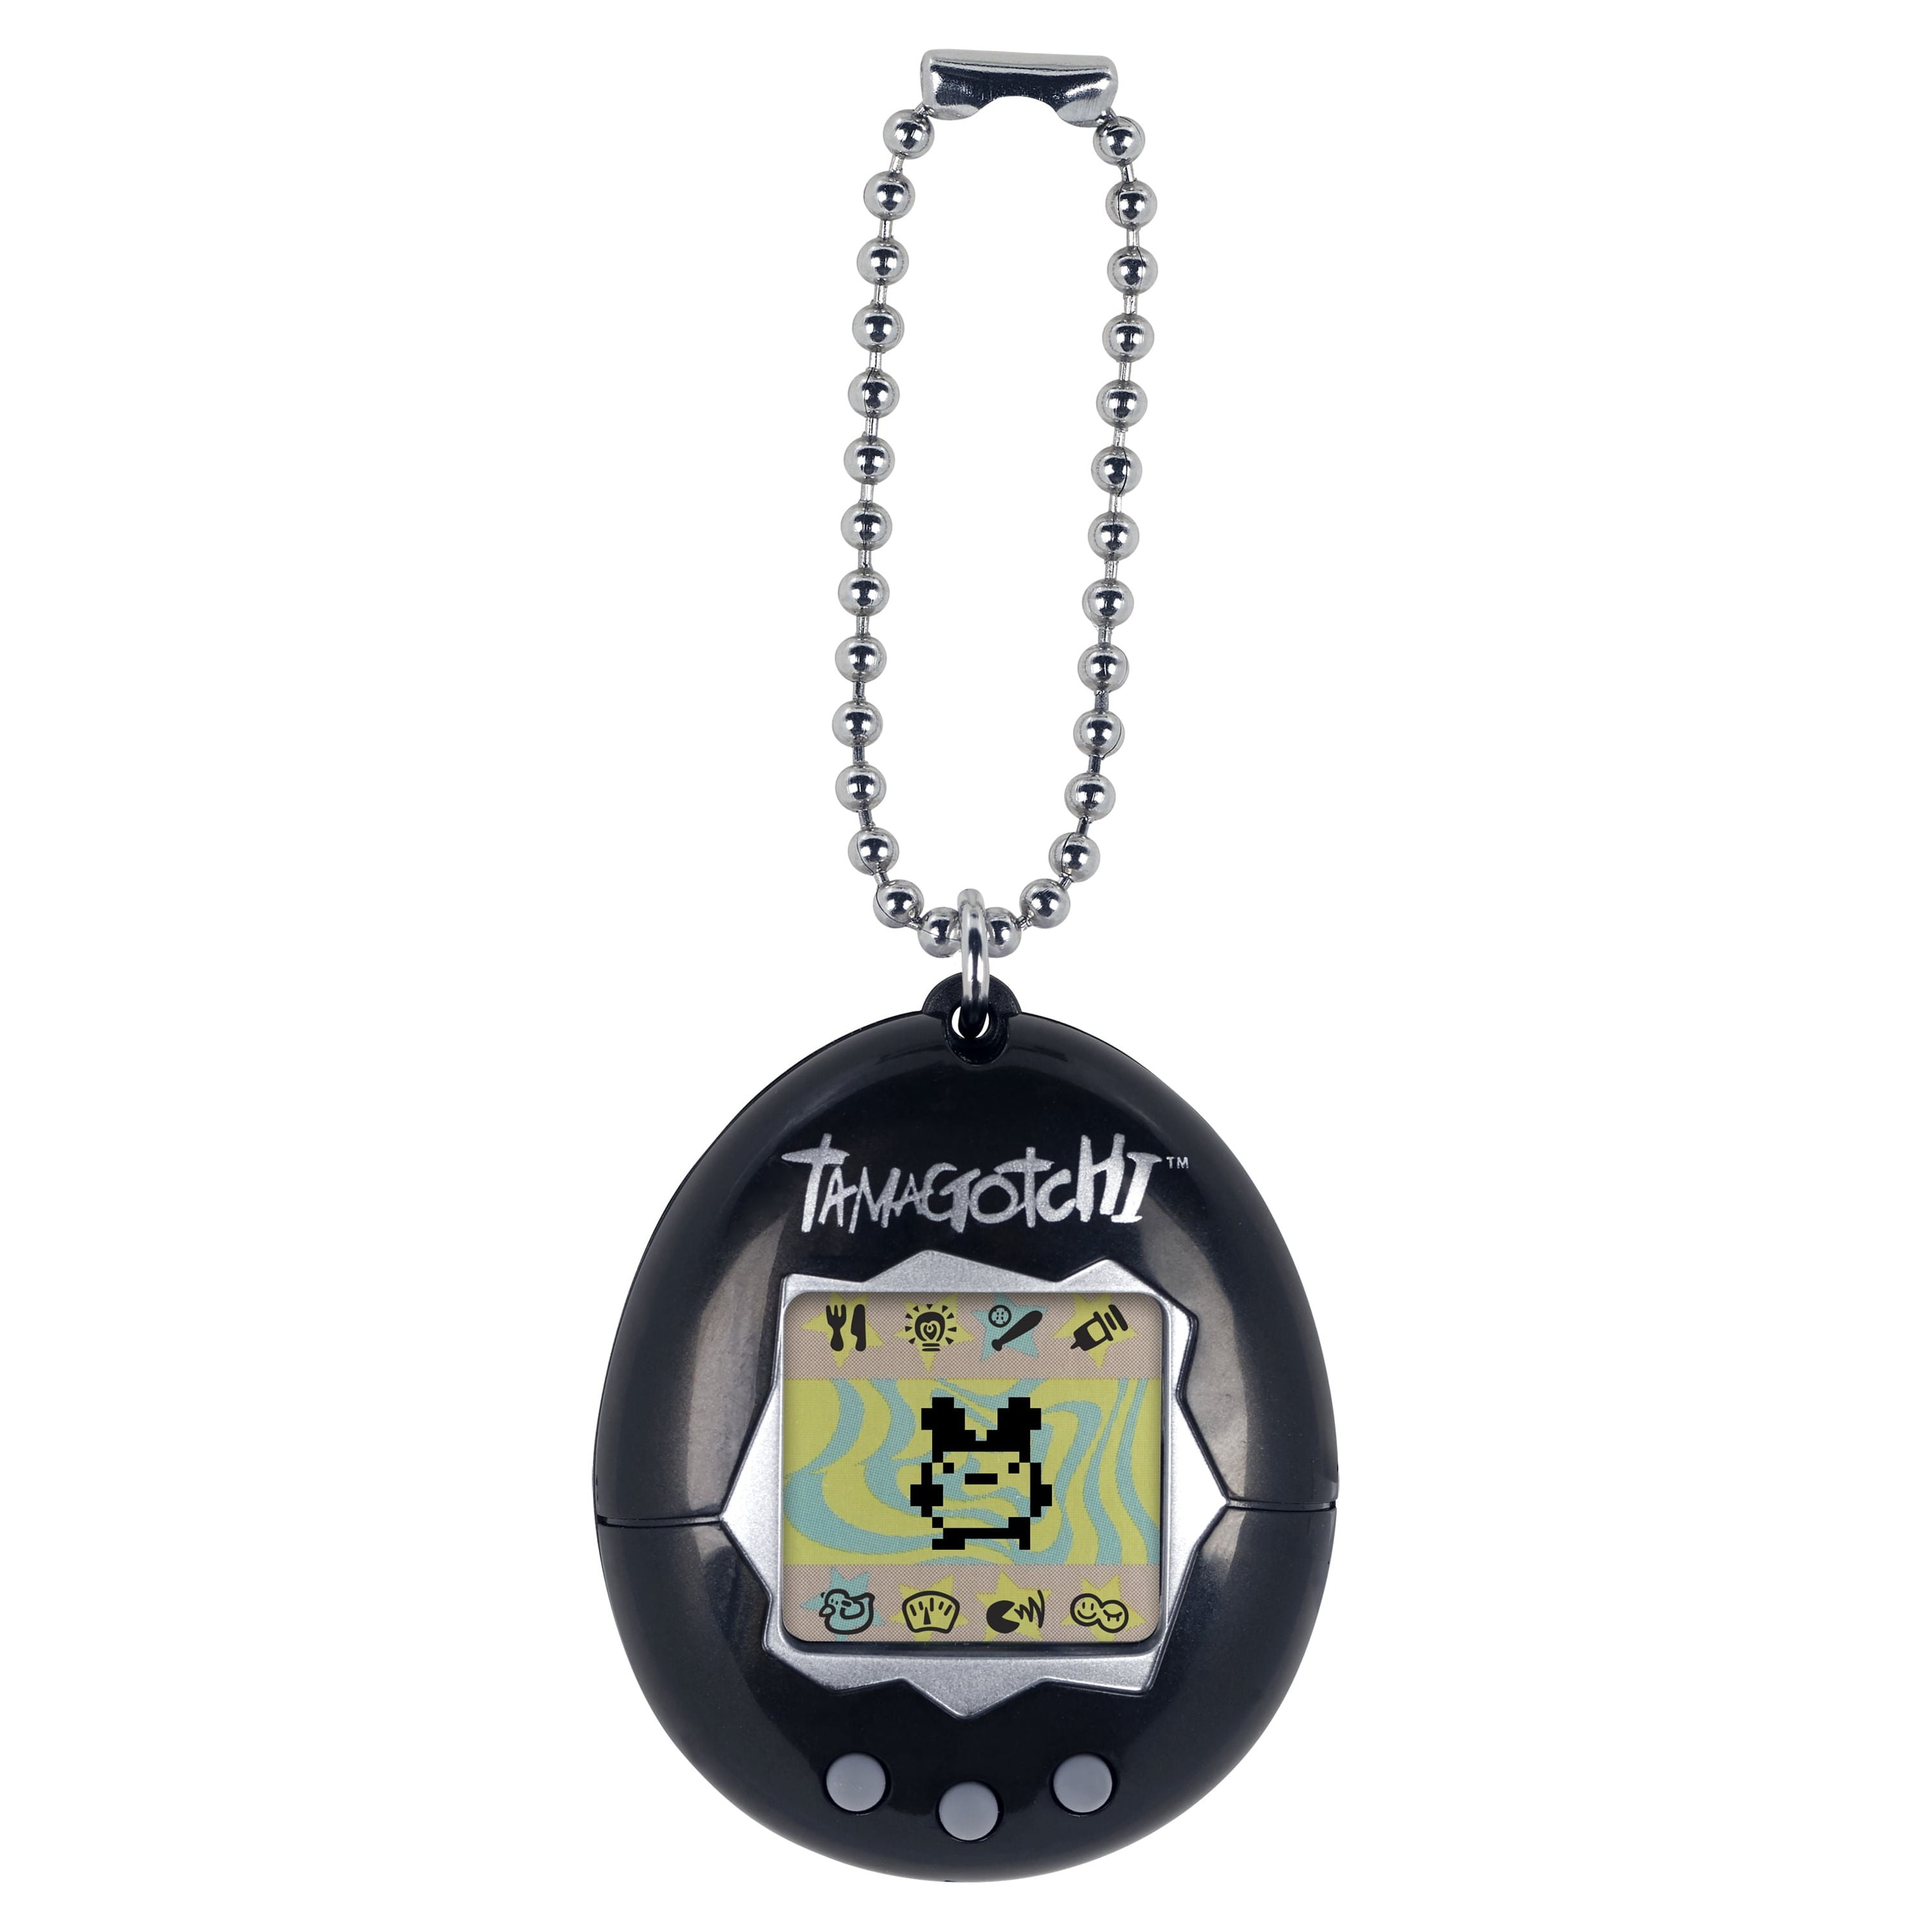 Original Tamagotchi - Black with Silver Electronic Pet